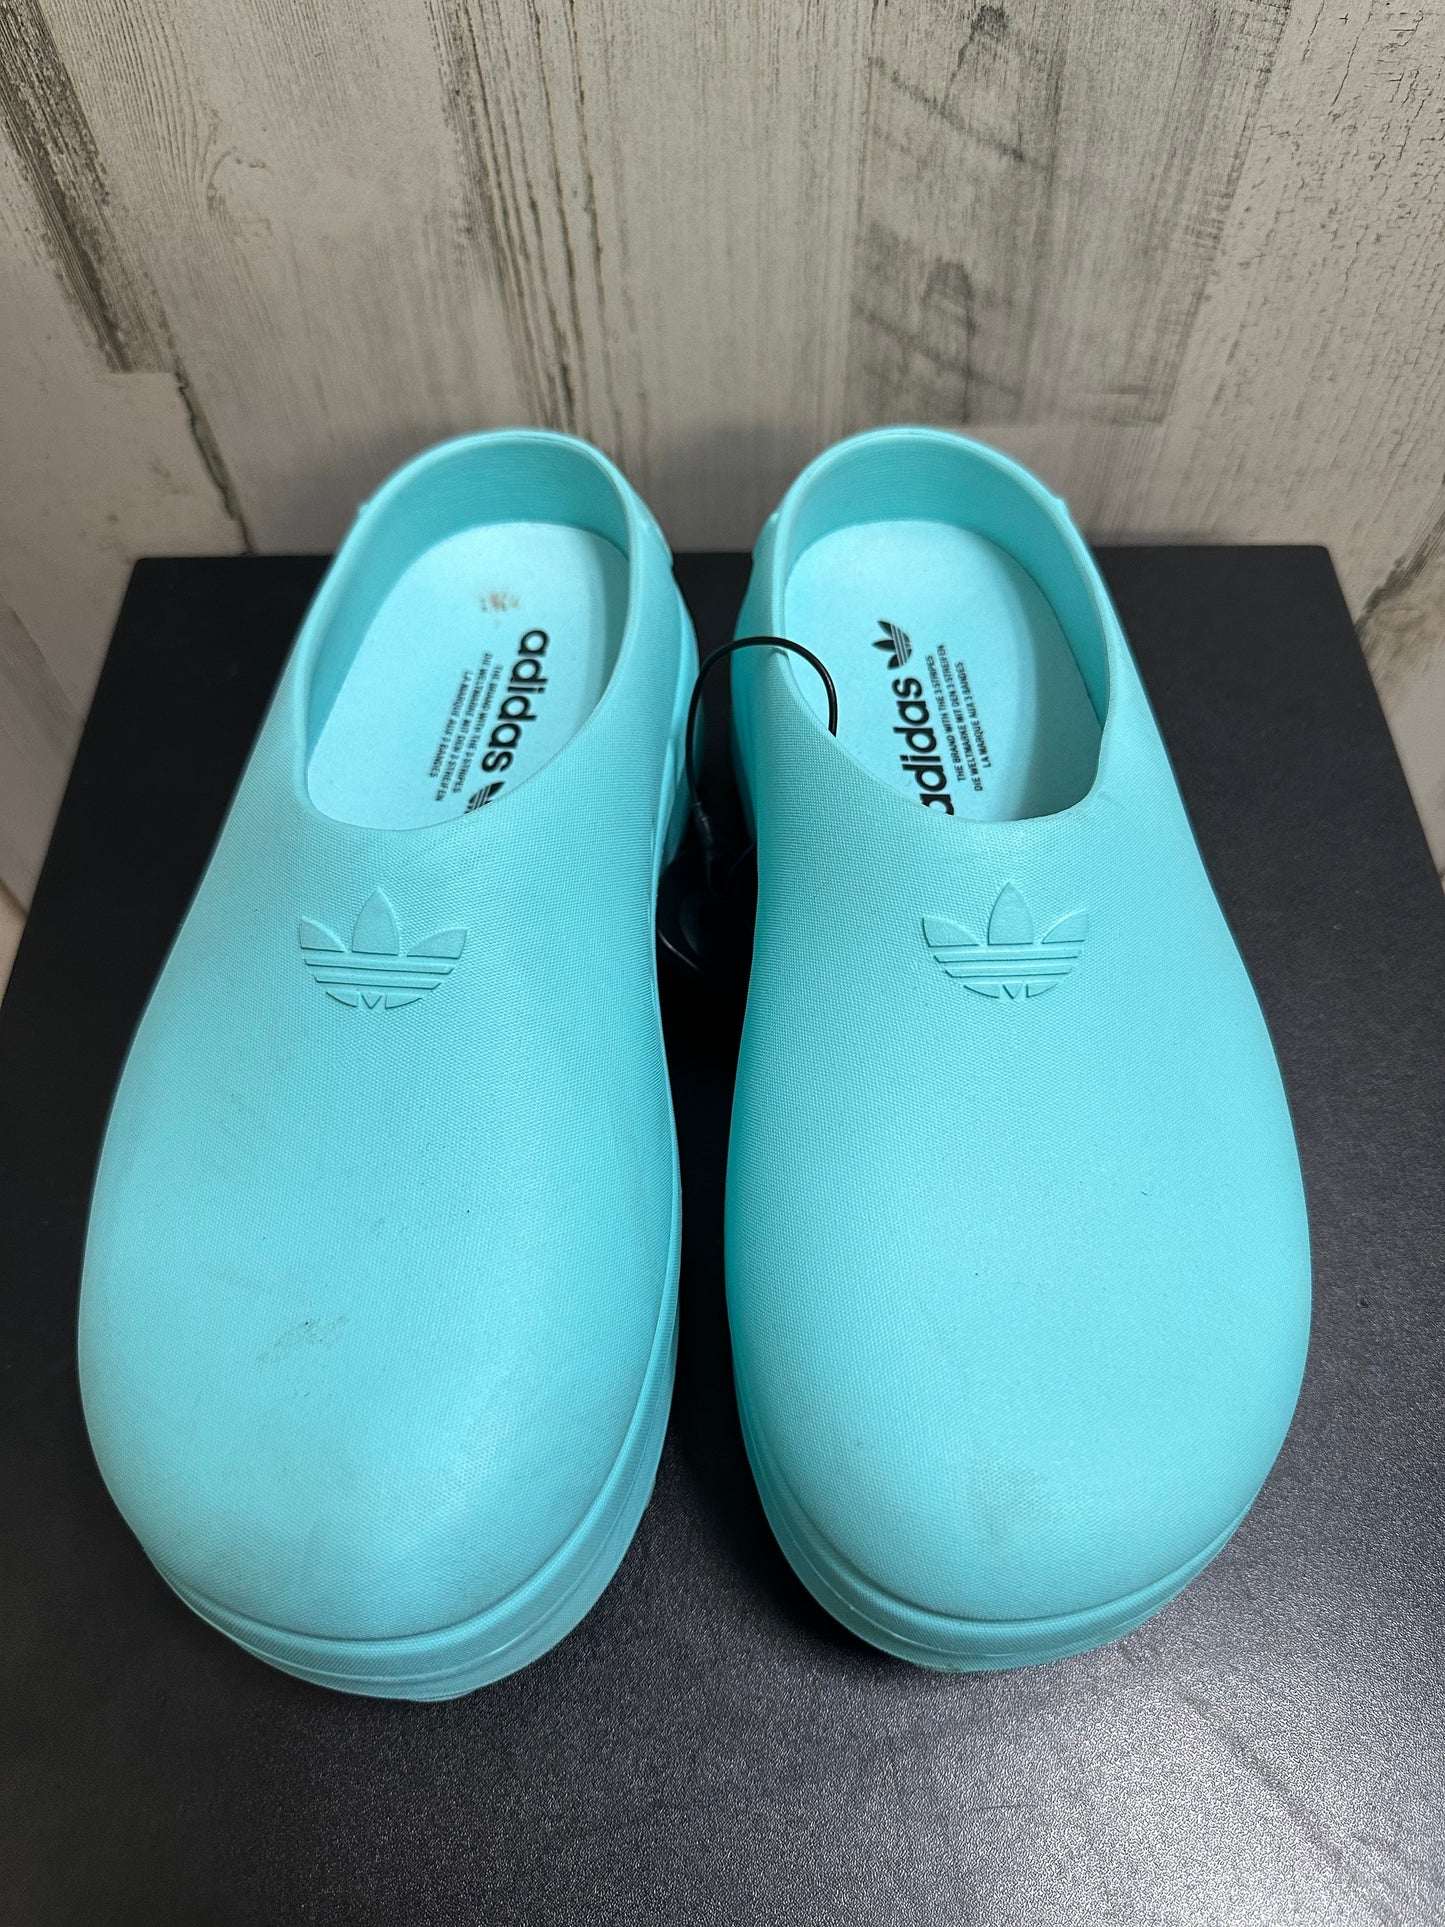 Blue Shoes Flats Adidas, Size 8